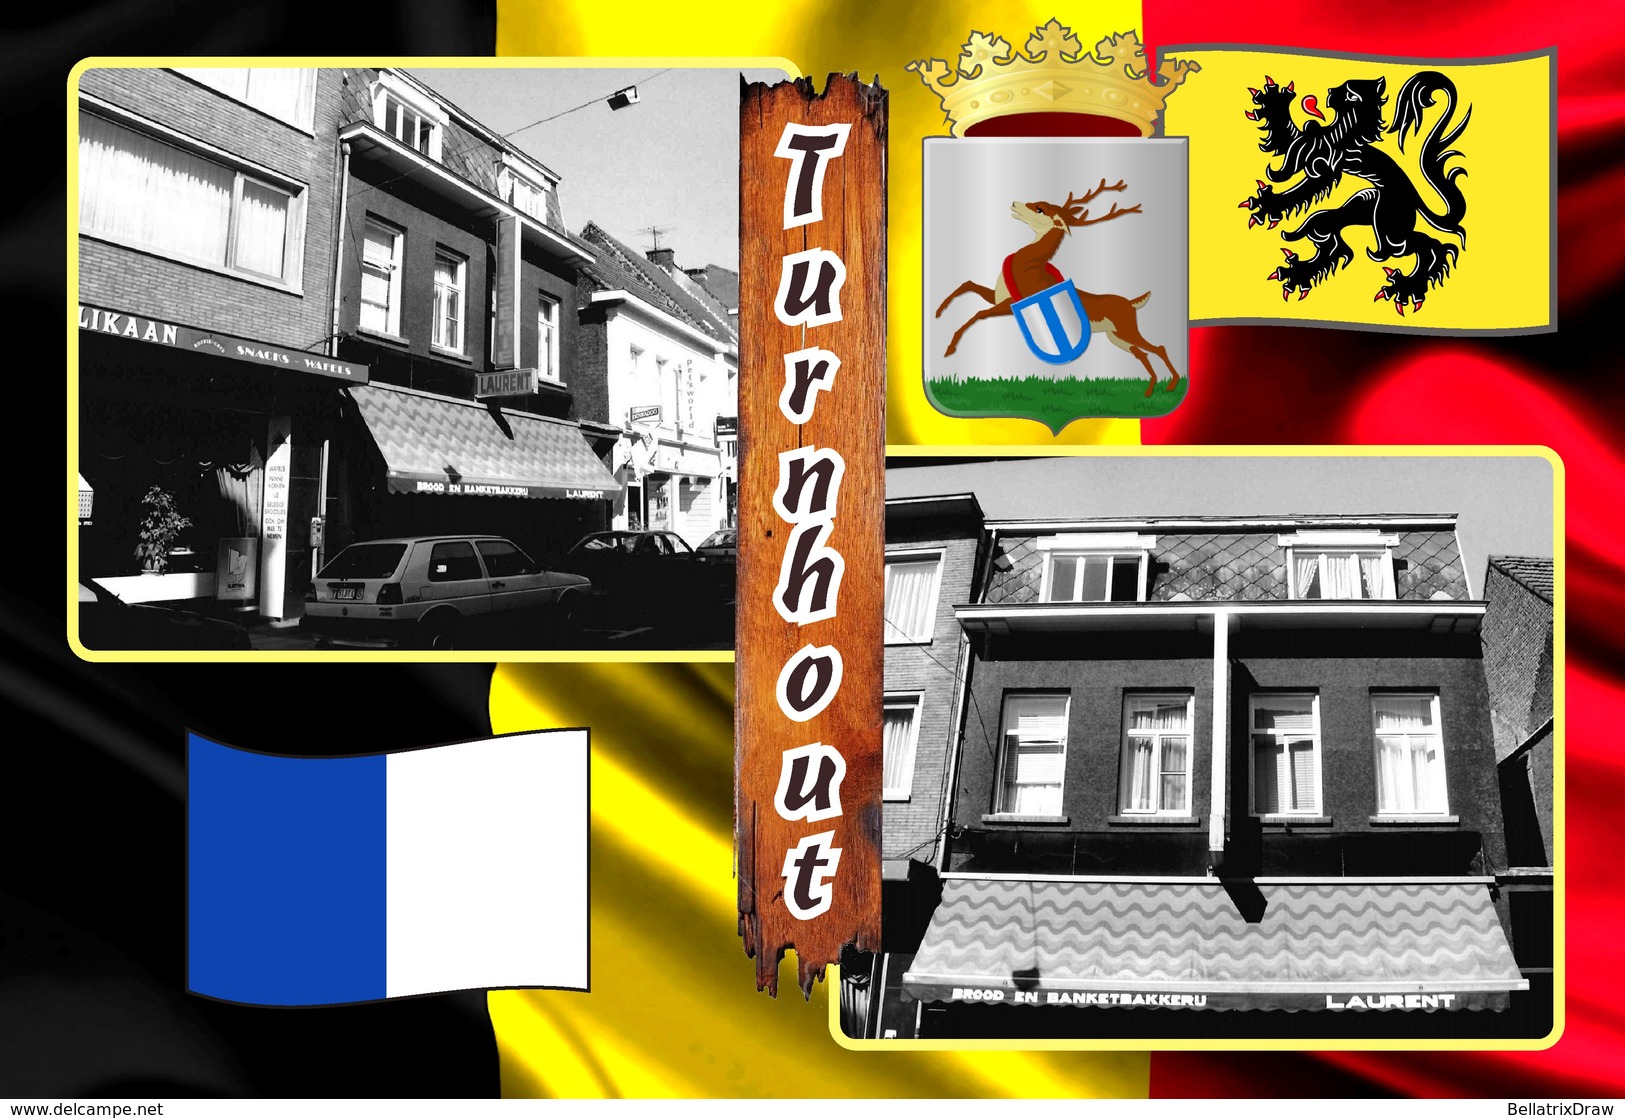 Postcards, REPRODUCTION, Municipalities of Belgium, Turnhout, duplex 295 - 345 = 51 pcs.